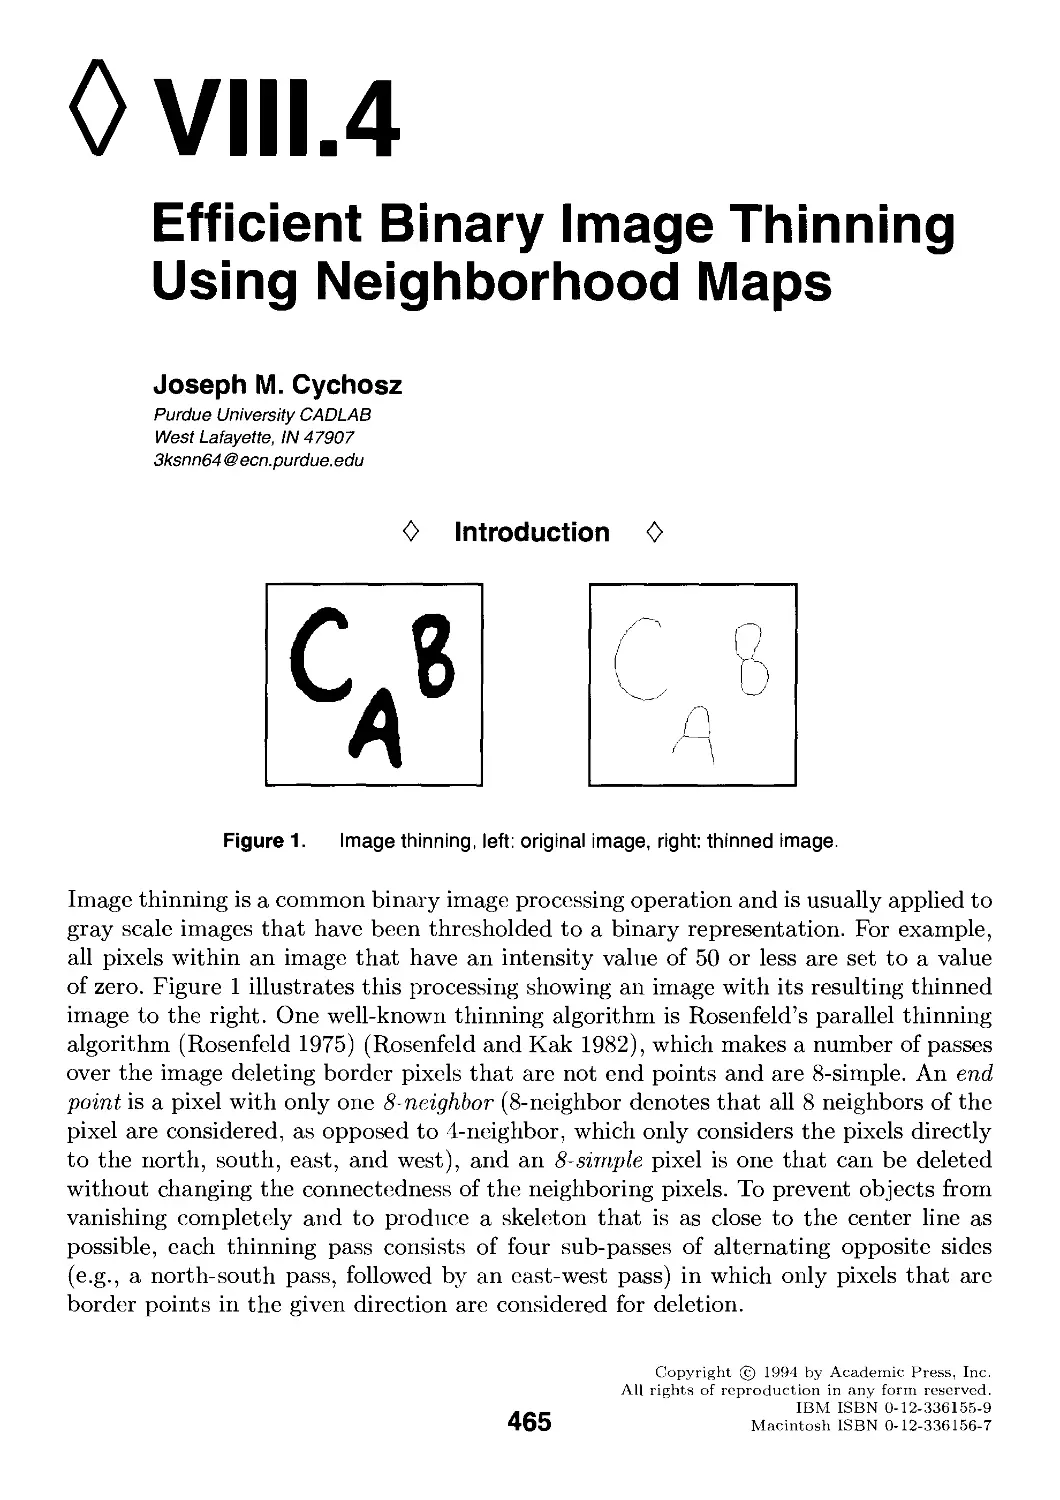 VIII.4. Efficient Binary Image Thinning Using Neighborhood Maps by Joseph M. Cychosz